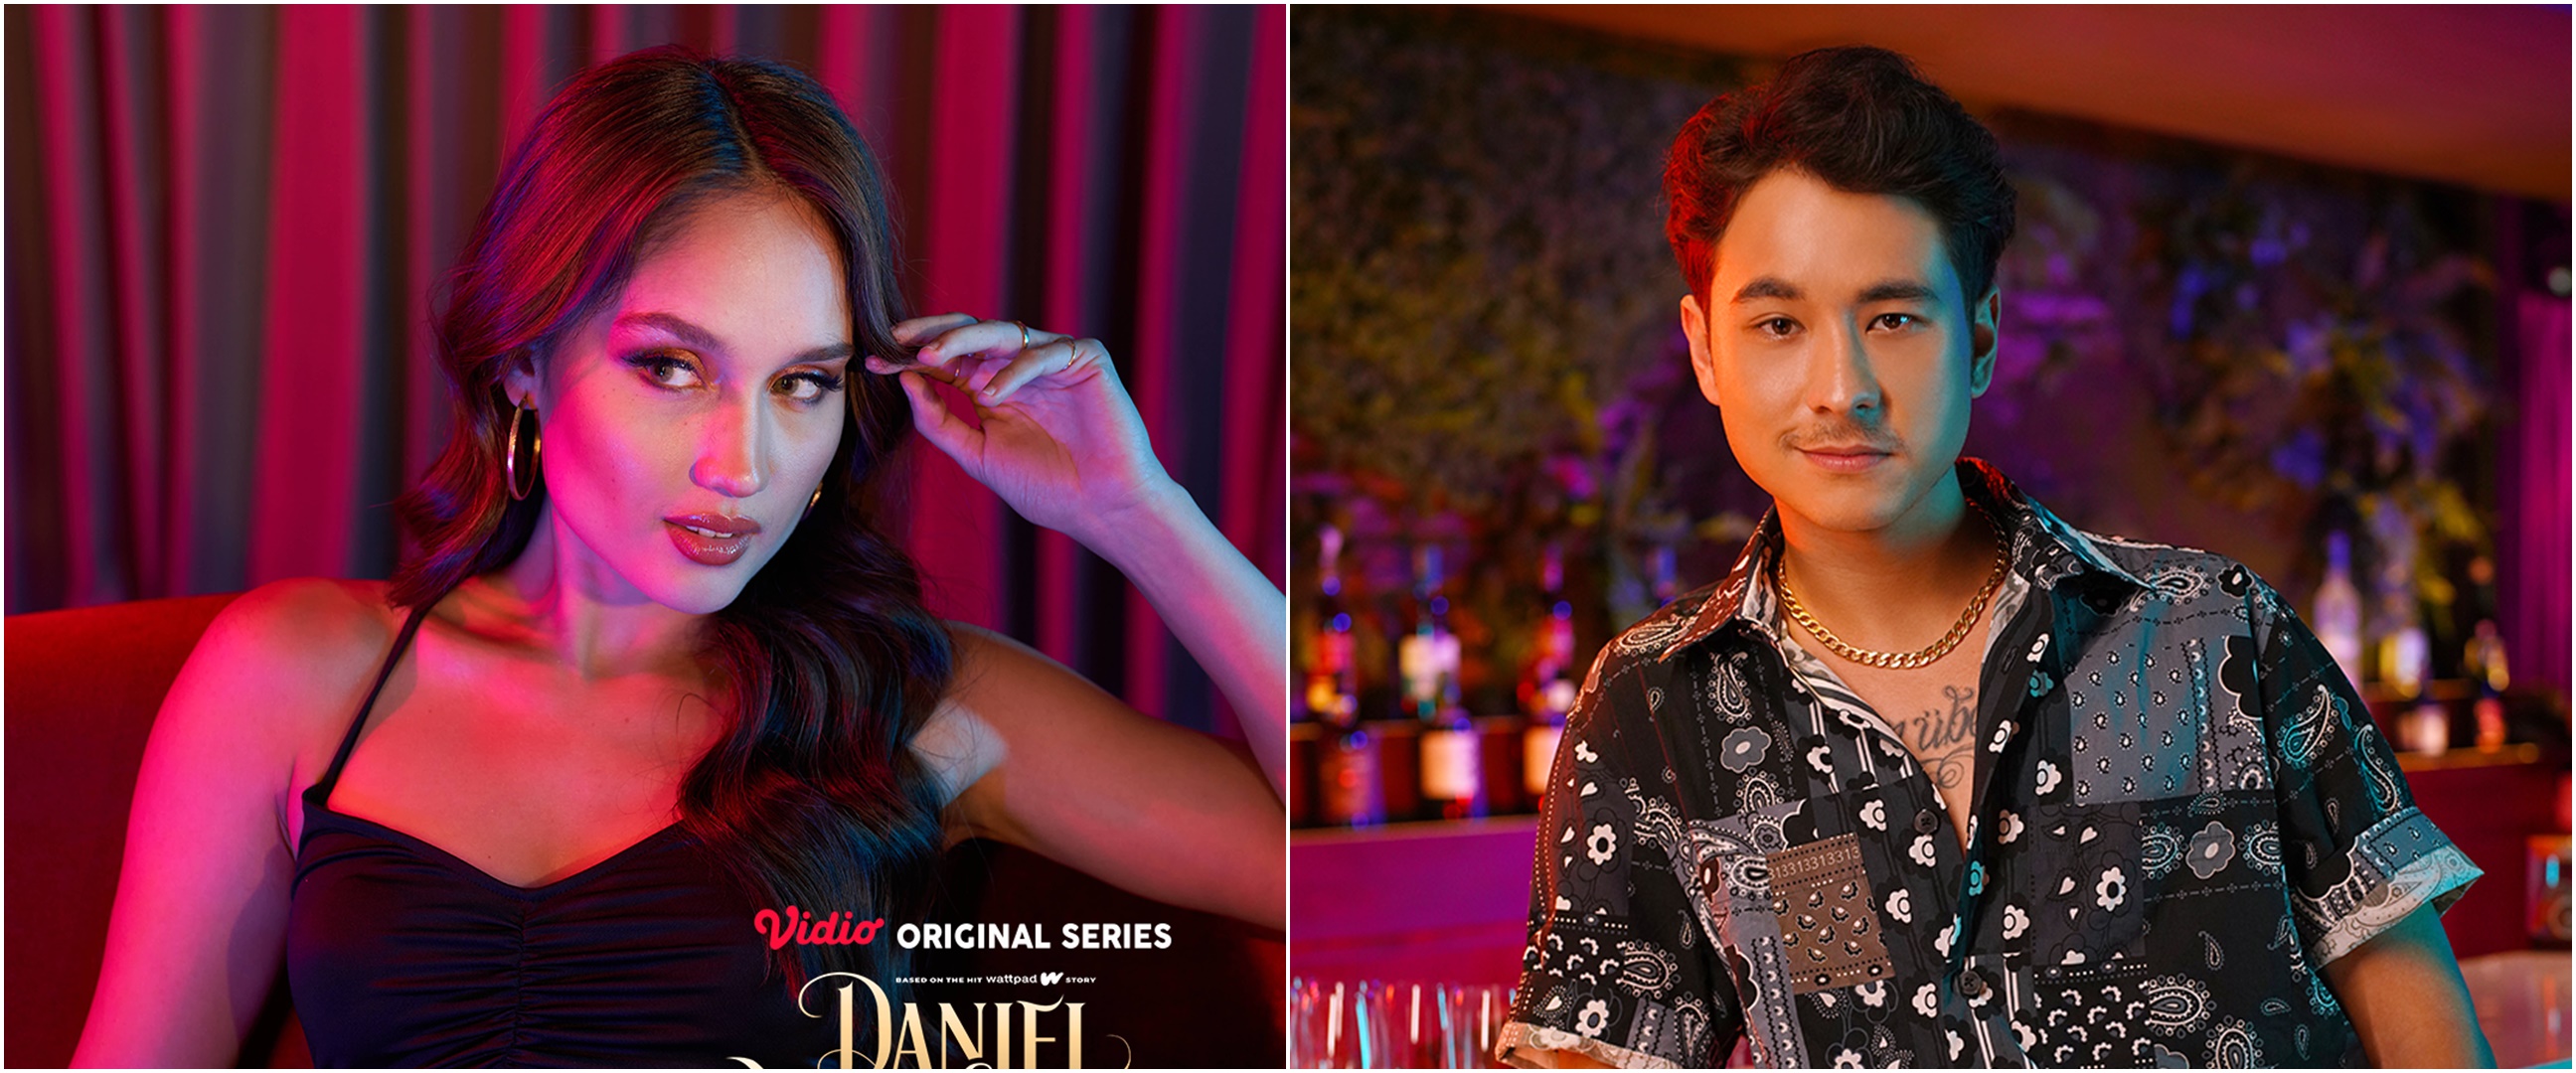 Vidio rilis photoshoot eksklusif serial terbaru 'Daniel & Nicolette'